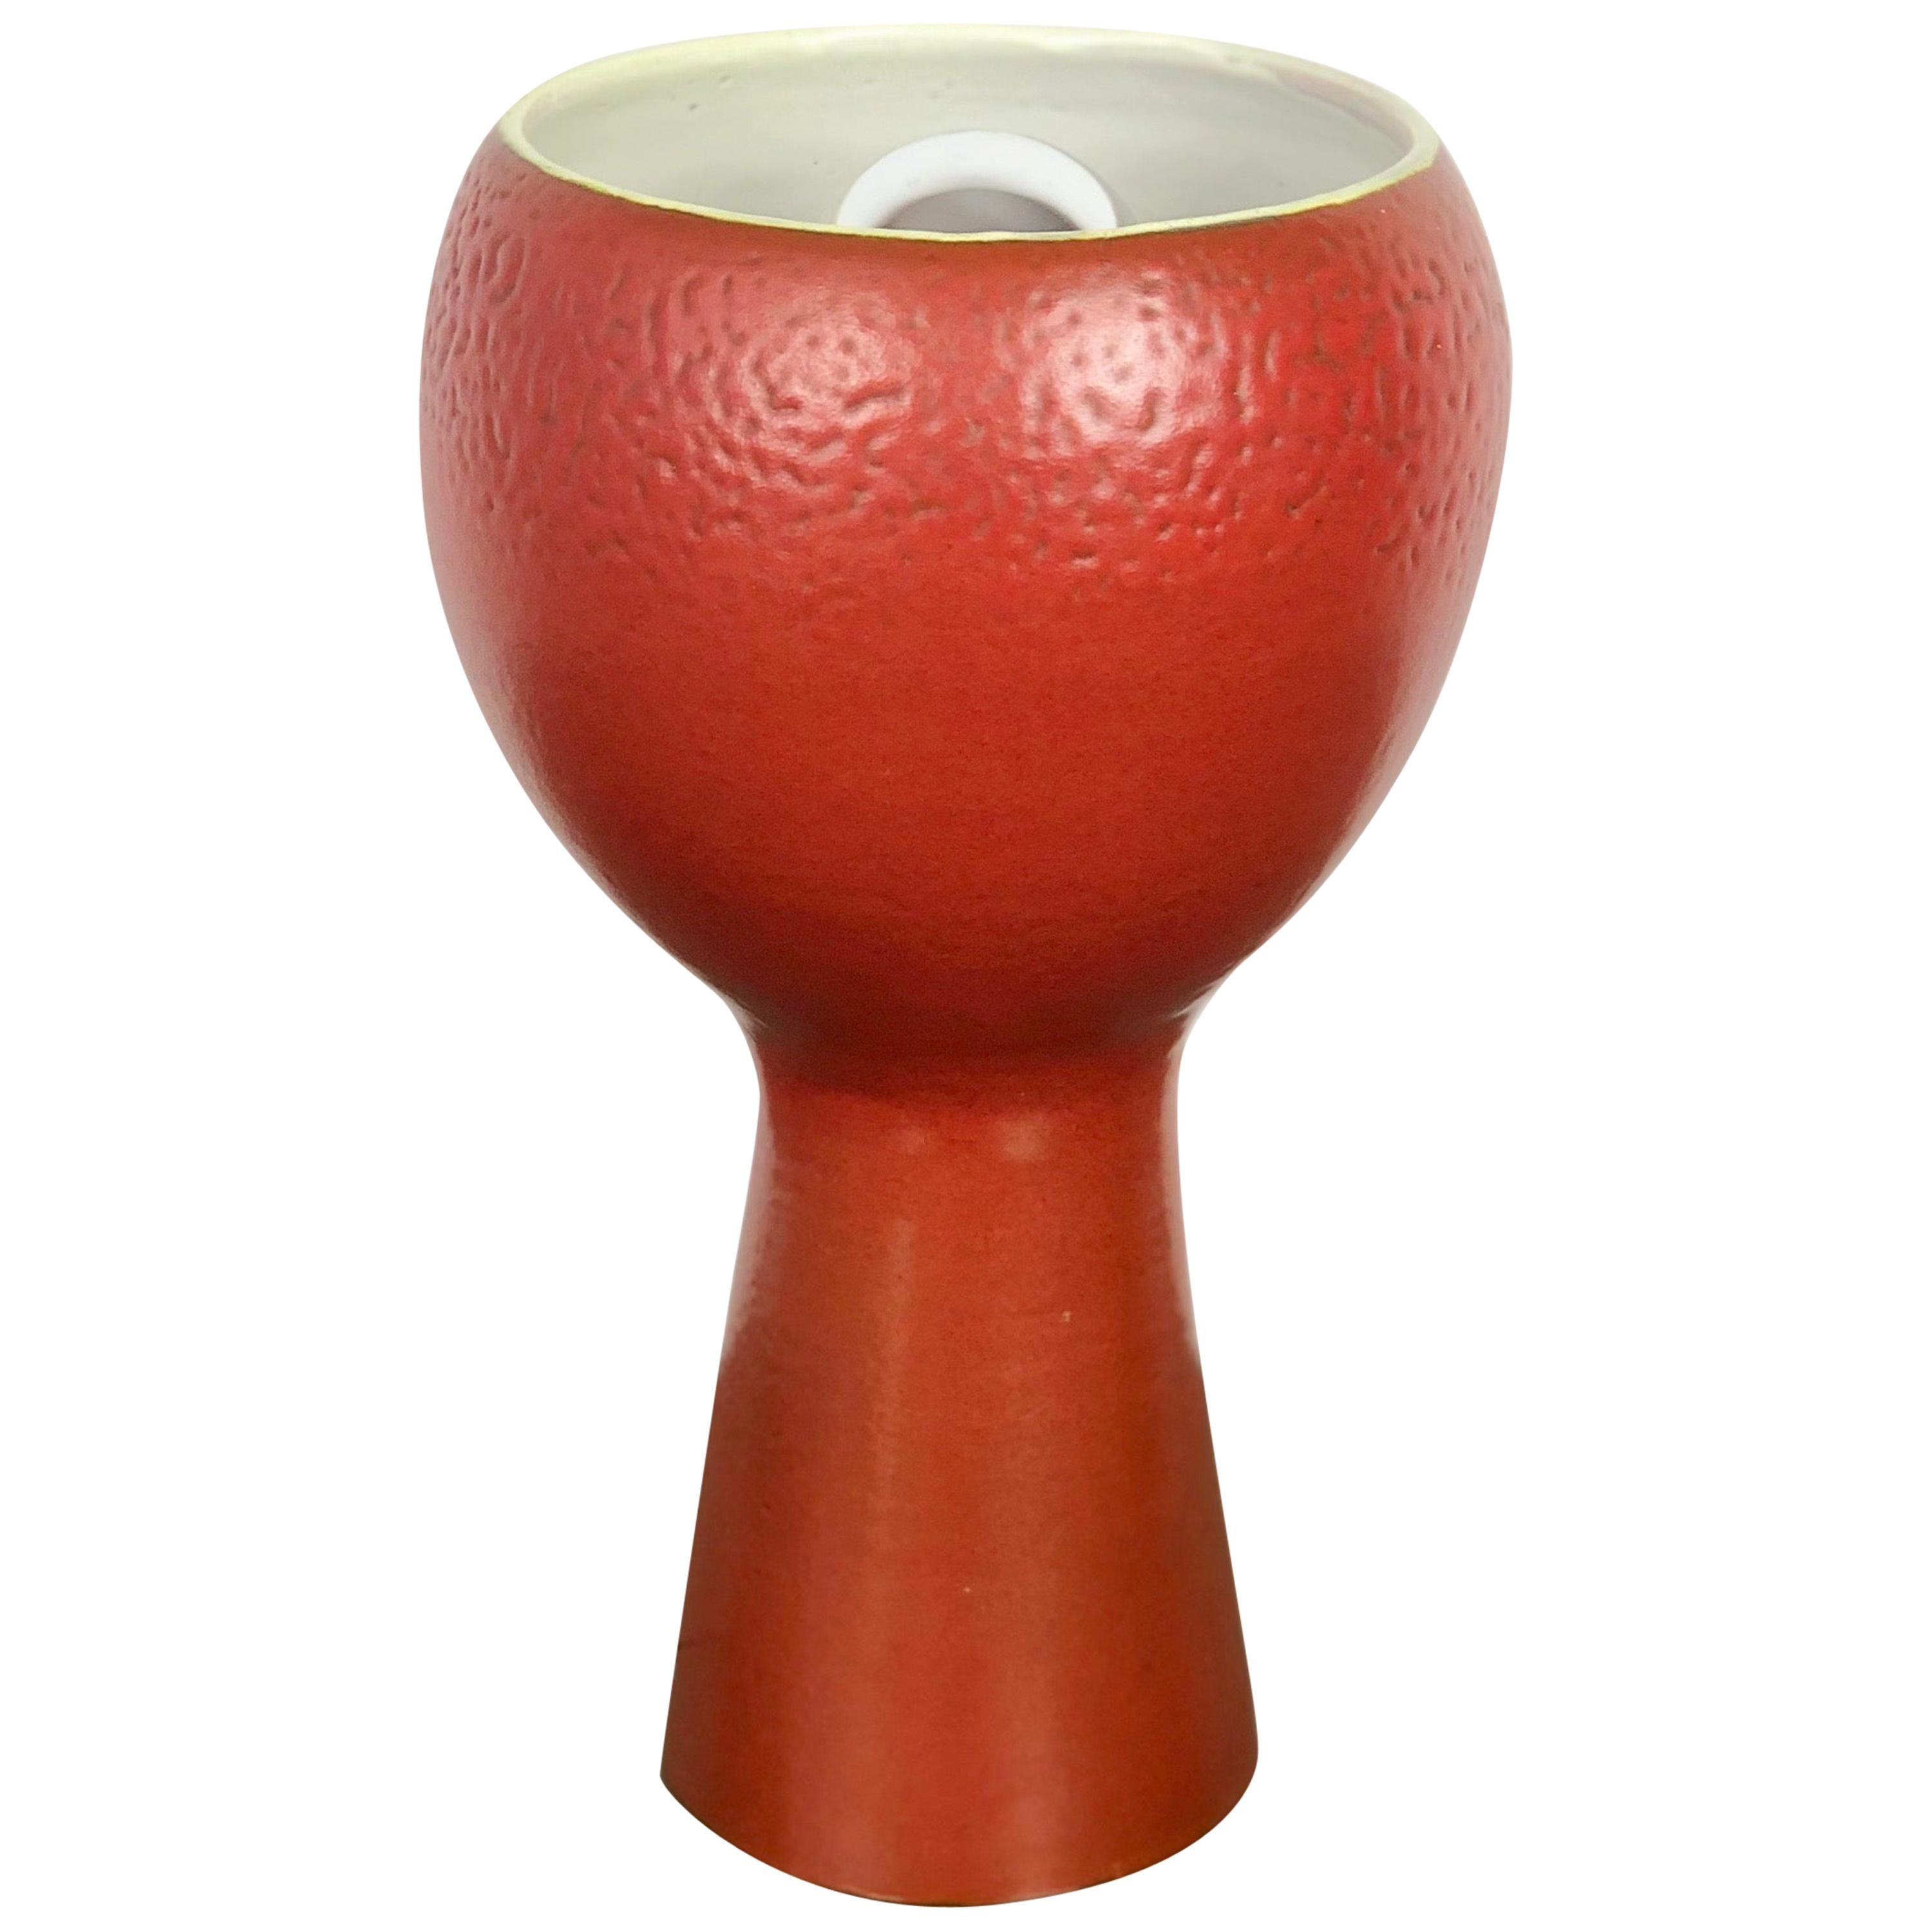 Ziegelrote Keramik-Tischlampe in Cup-Form, Italien, 1960er Jahre